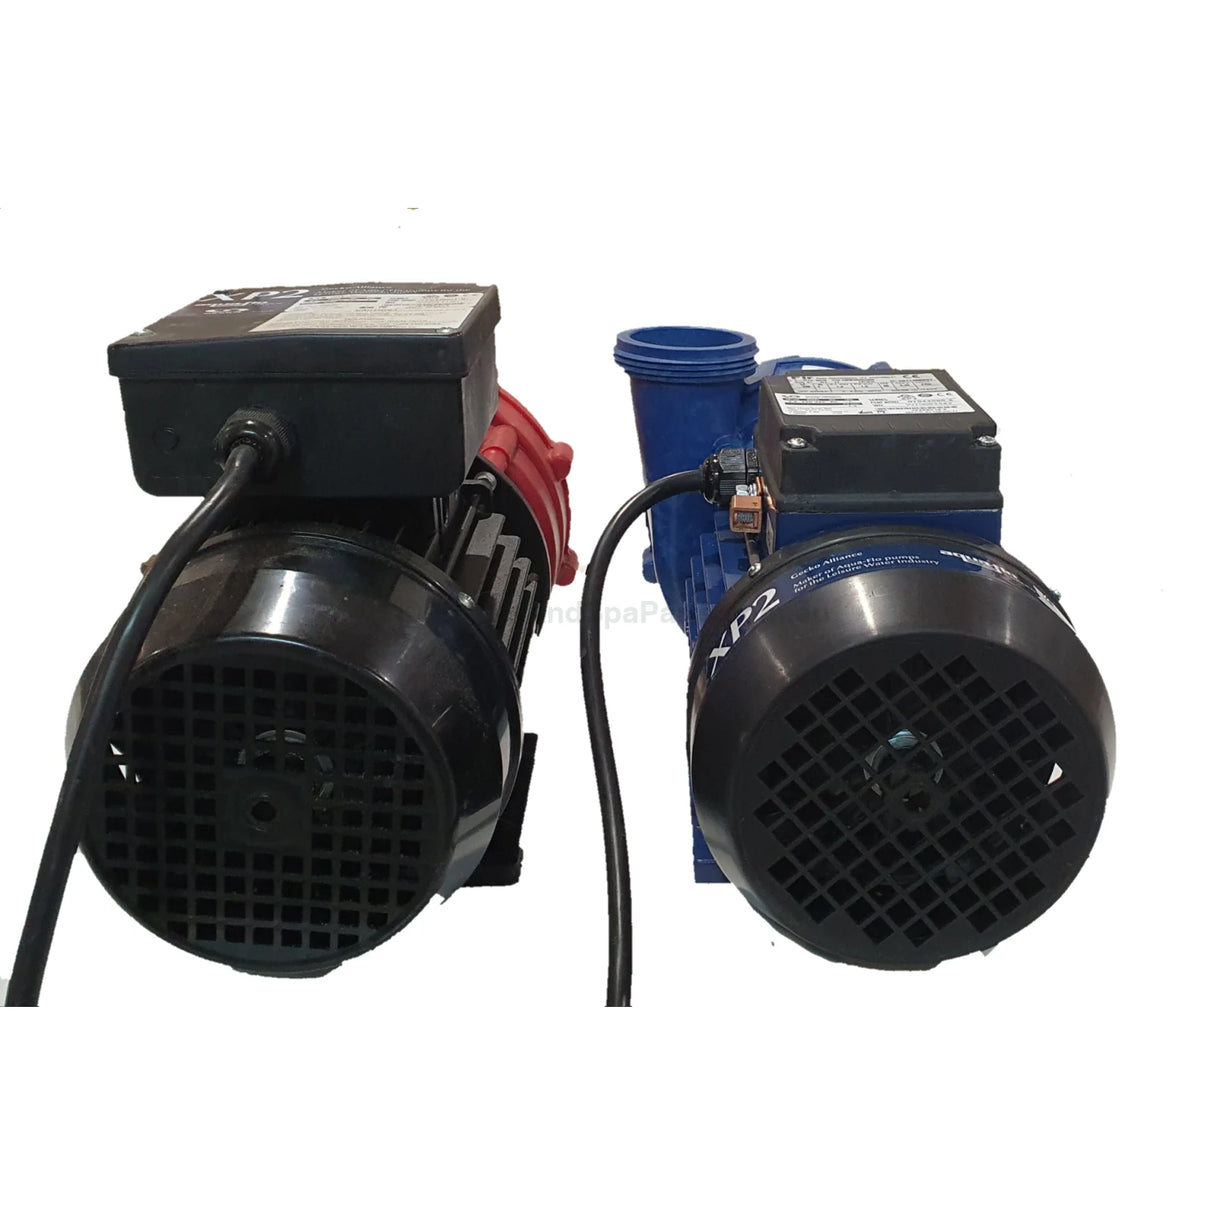 Aqua-Flo XP2 2.5HP(4.8BHP) - 1-Speed Flo-Master - Spa Jet Booster Pump - Heater and Spa Parts